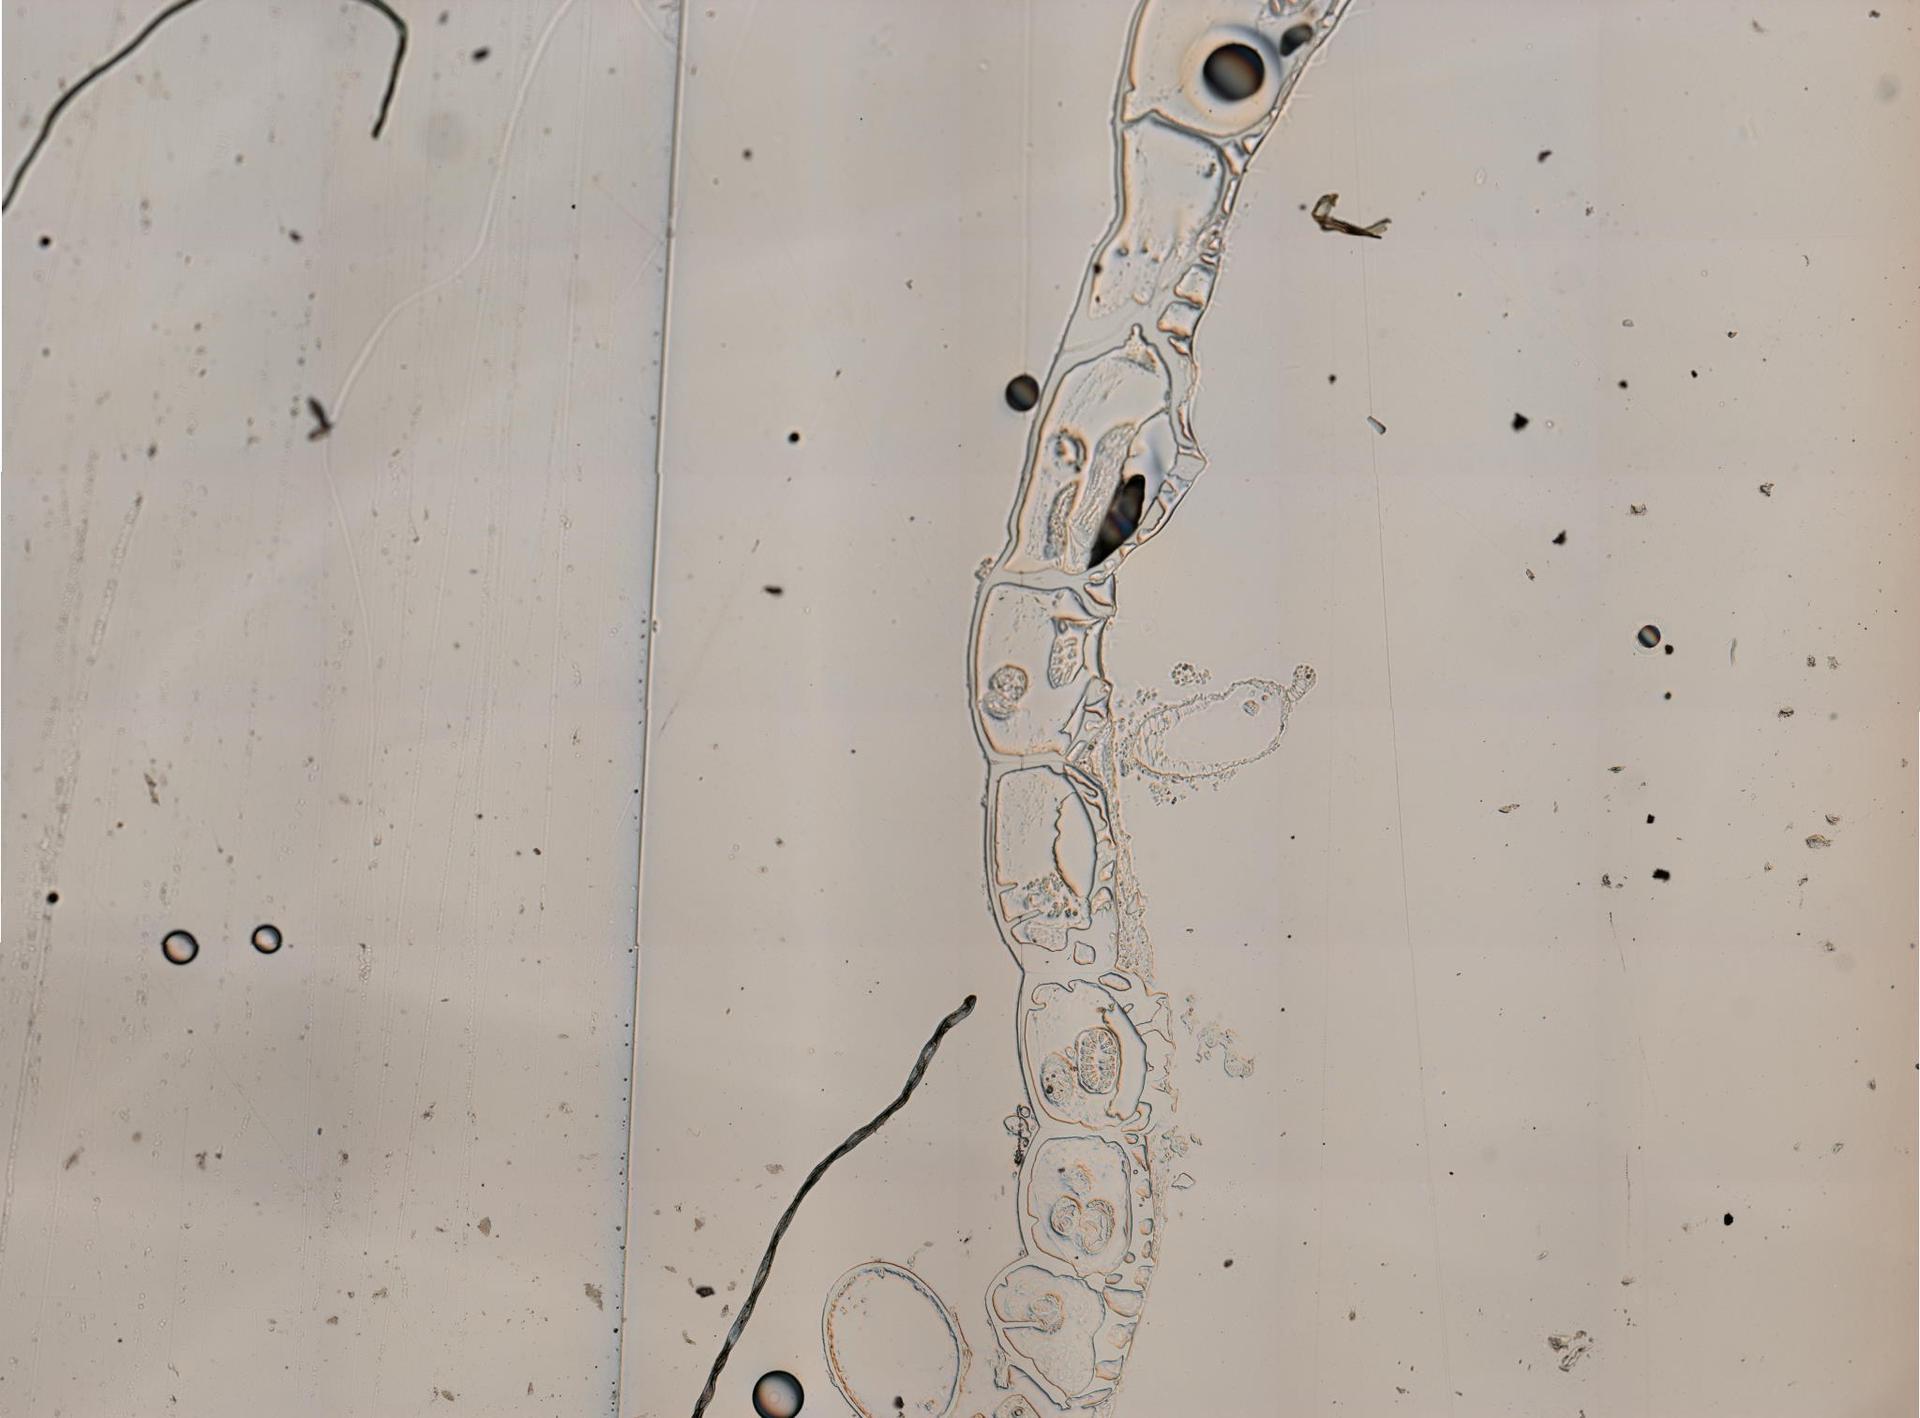 Schizoporella floridana image